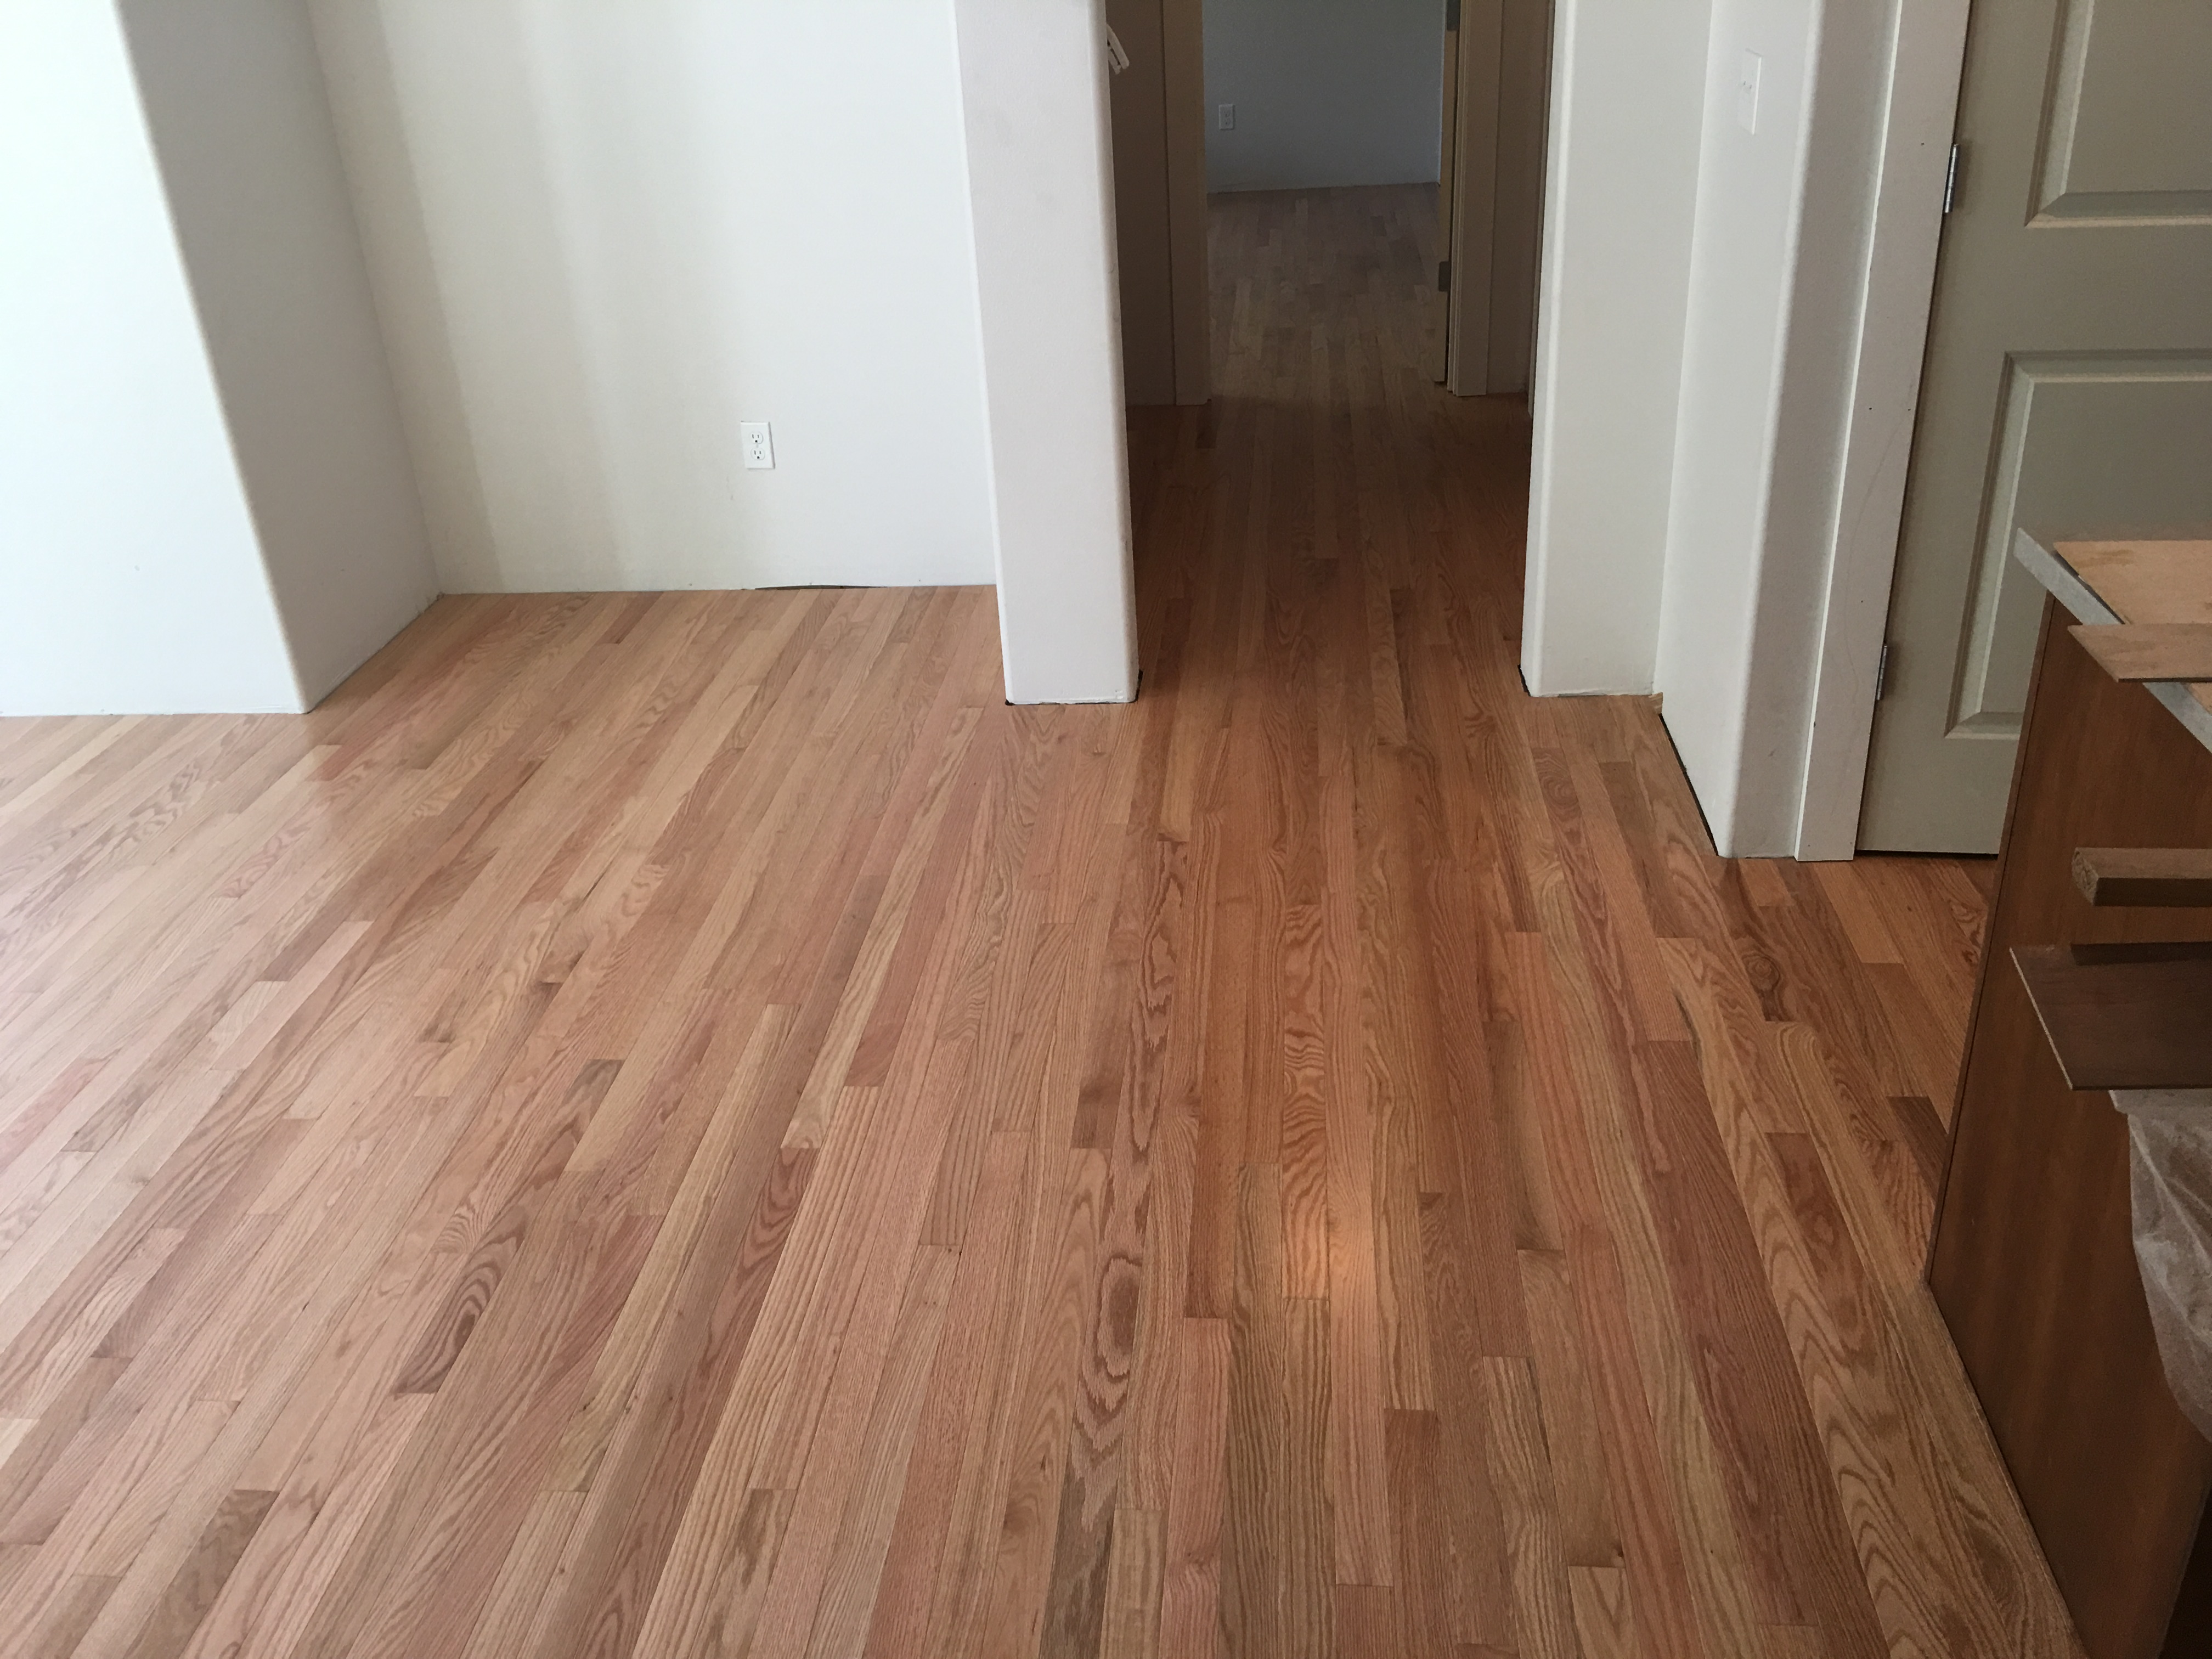 New Prefinished Floor